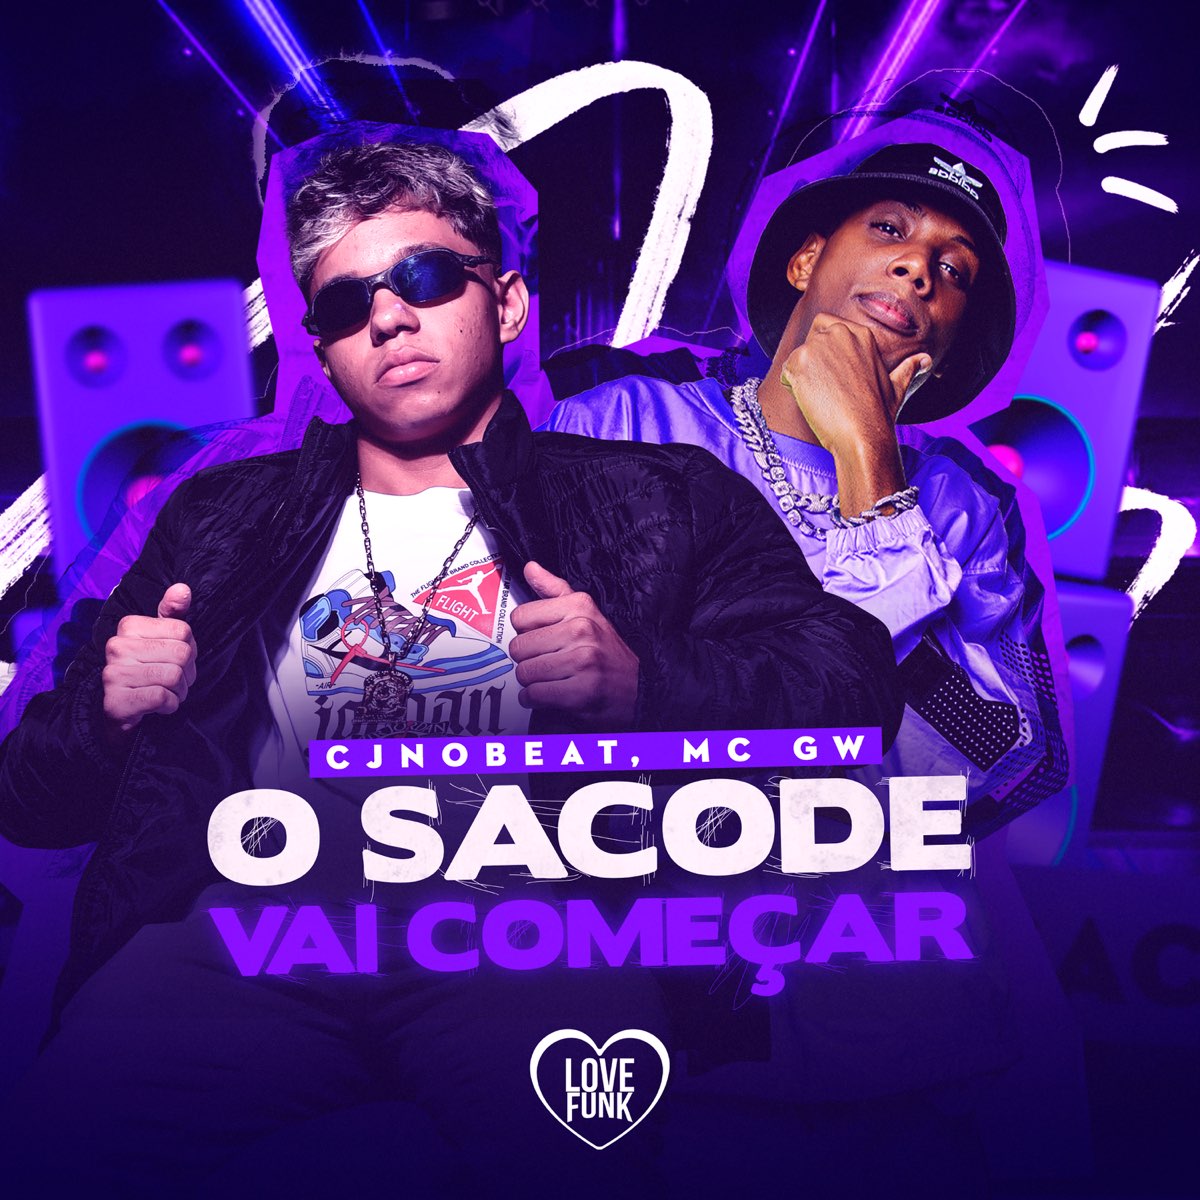 O Sacode Vai Começar - Single - Album by cjnobeat, MC GW & Love